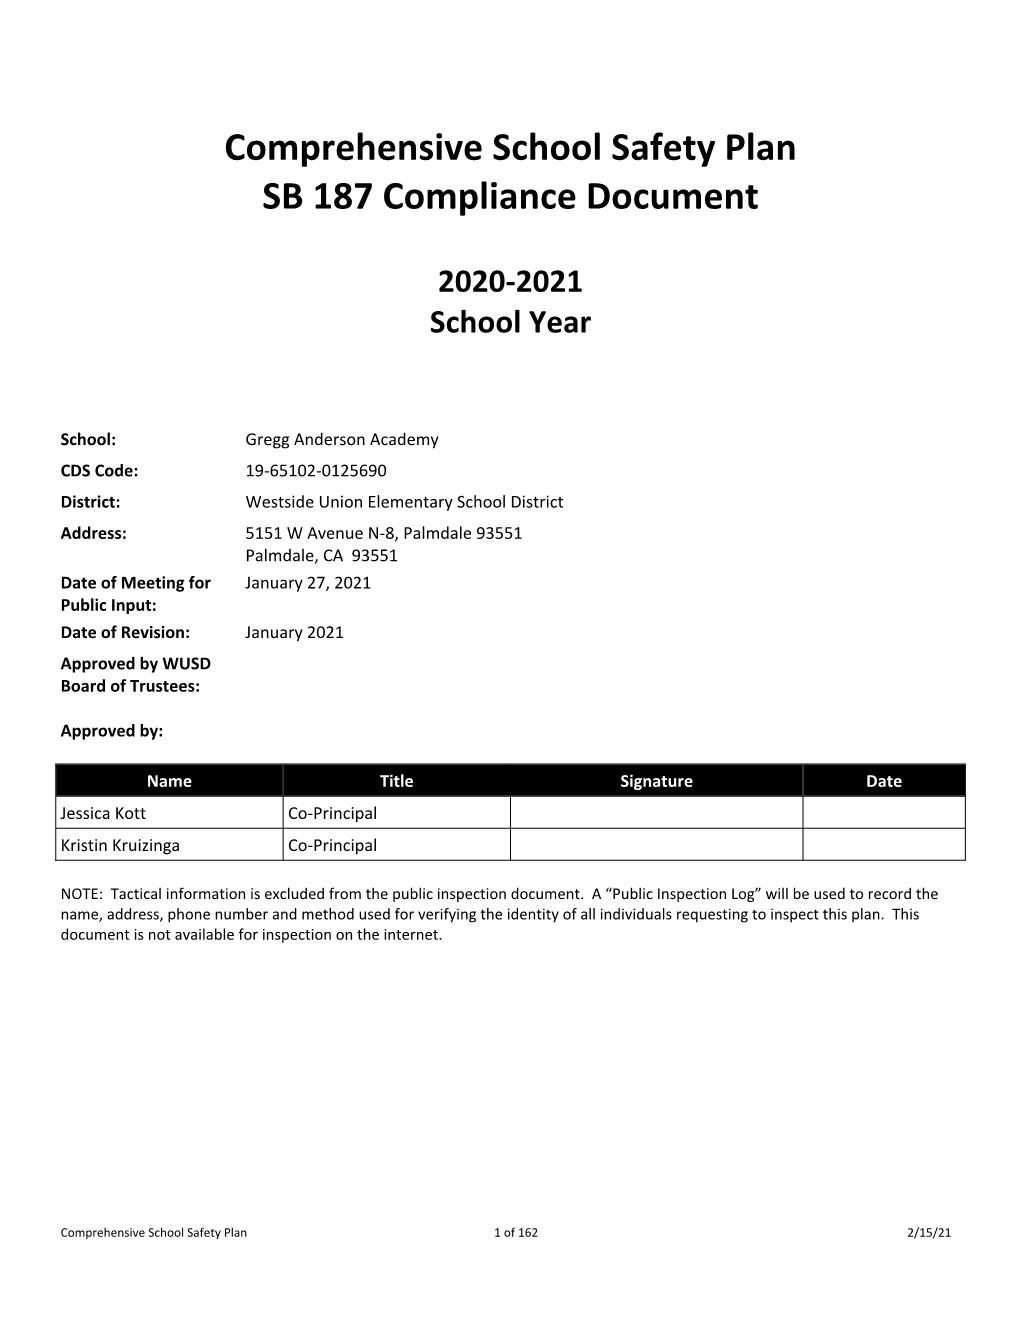 Comprehensive School Safety Plan SB 187 Compliance Document